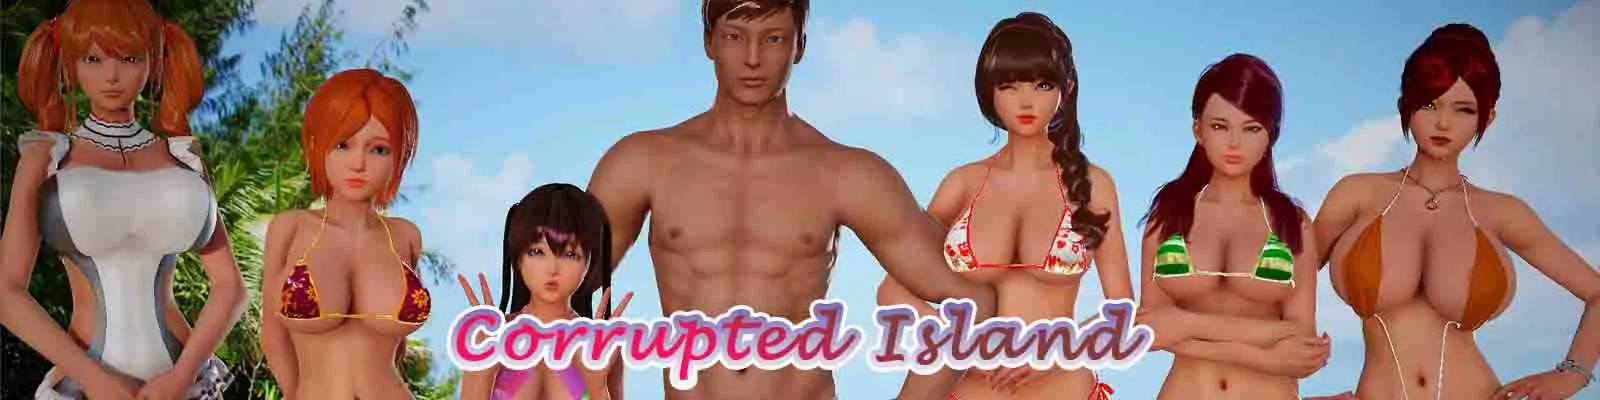 Korrupt Island 3d sexspill, pornospill, xxx-spill